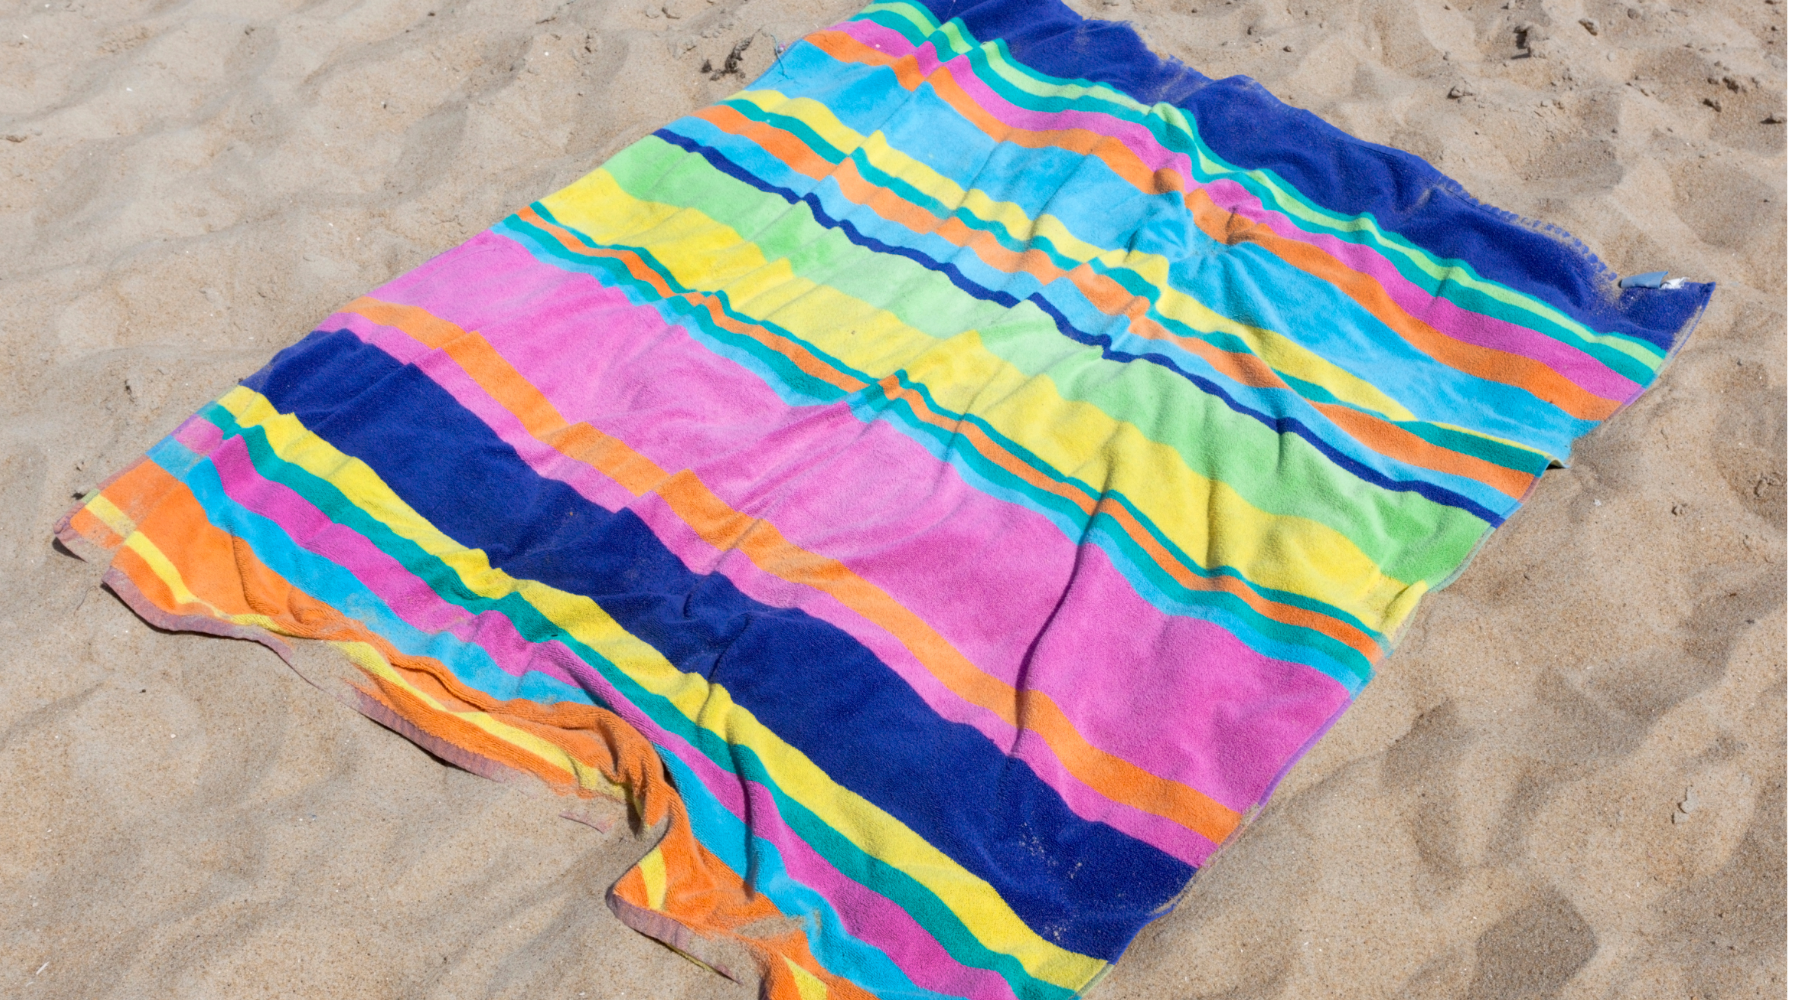 Cotton Beach Towel